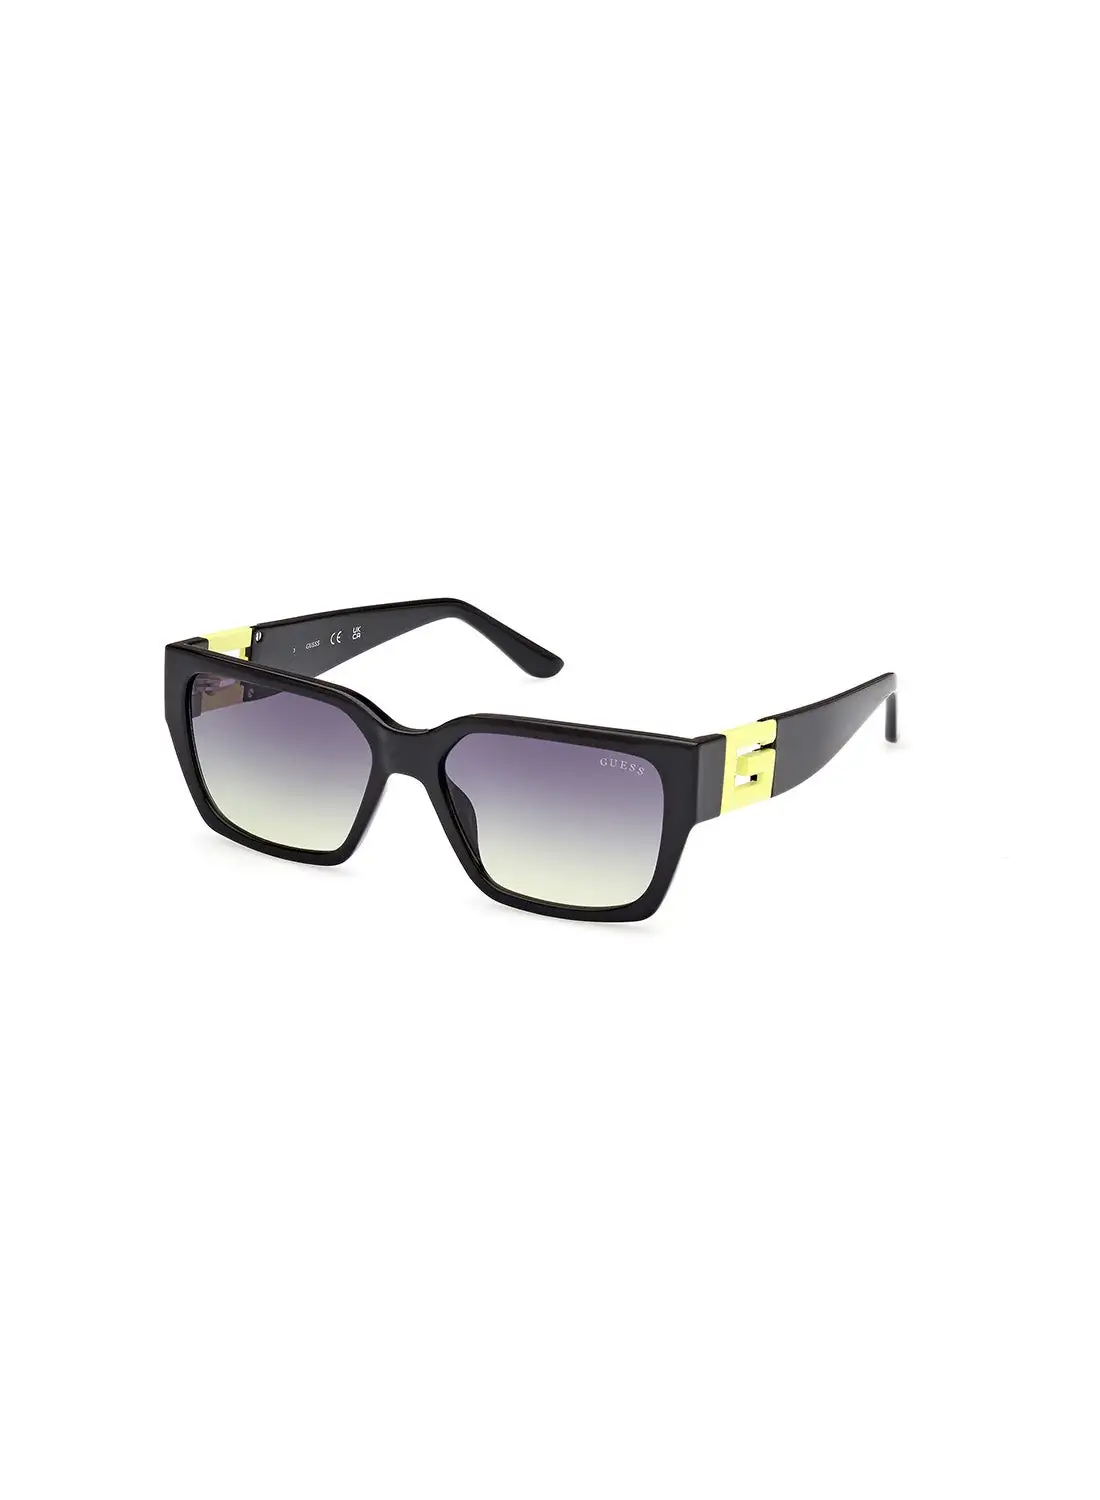 GUESS Unisex UV Protection Square Sunglasses - GU791641B55 - Lens Size: 55 Mm